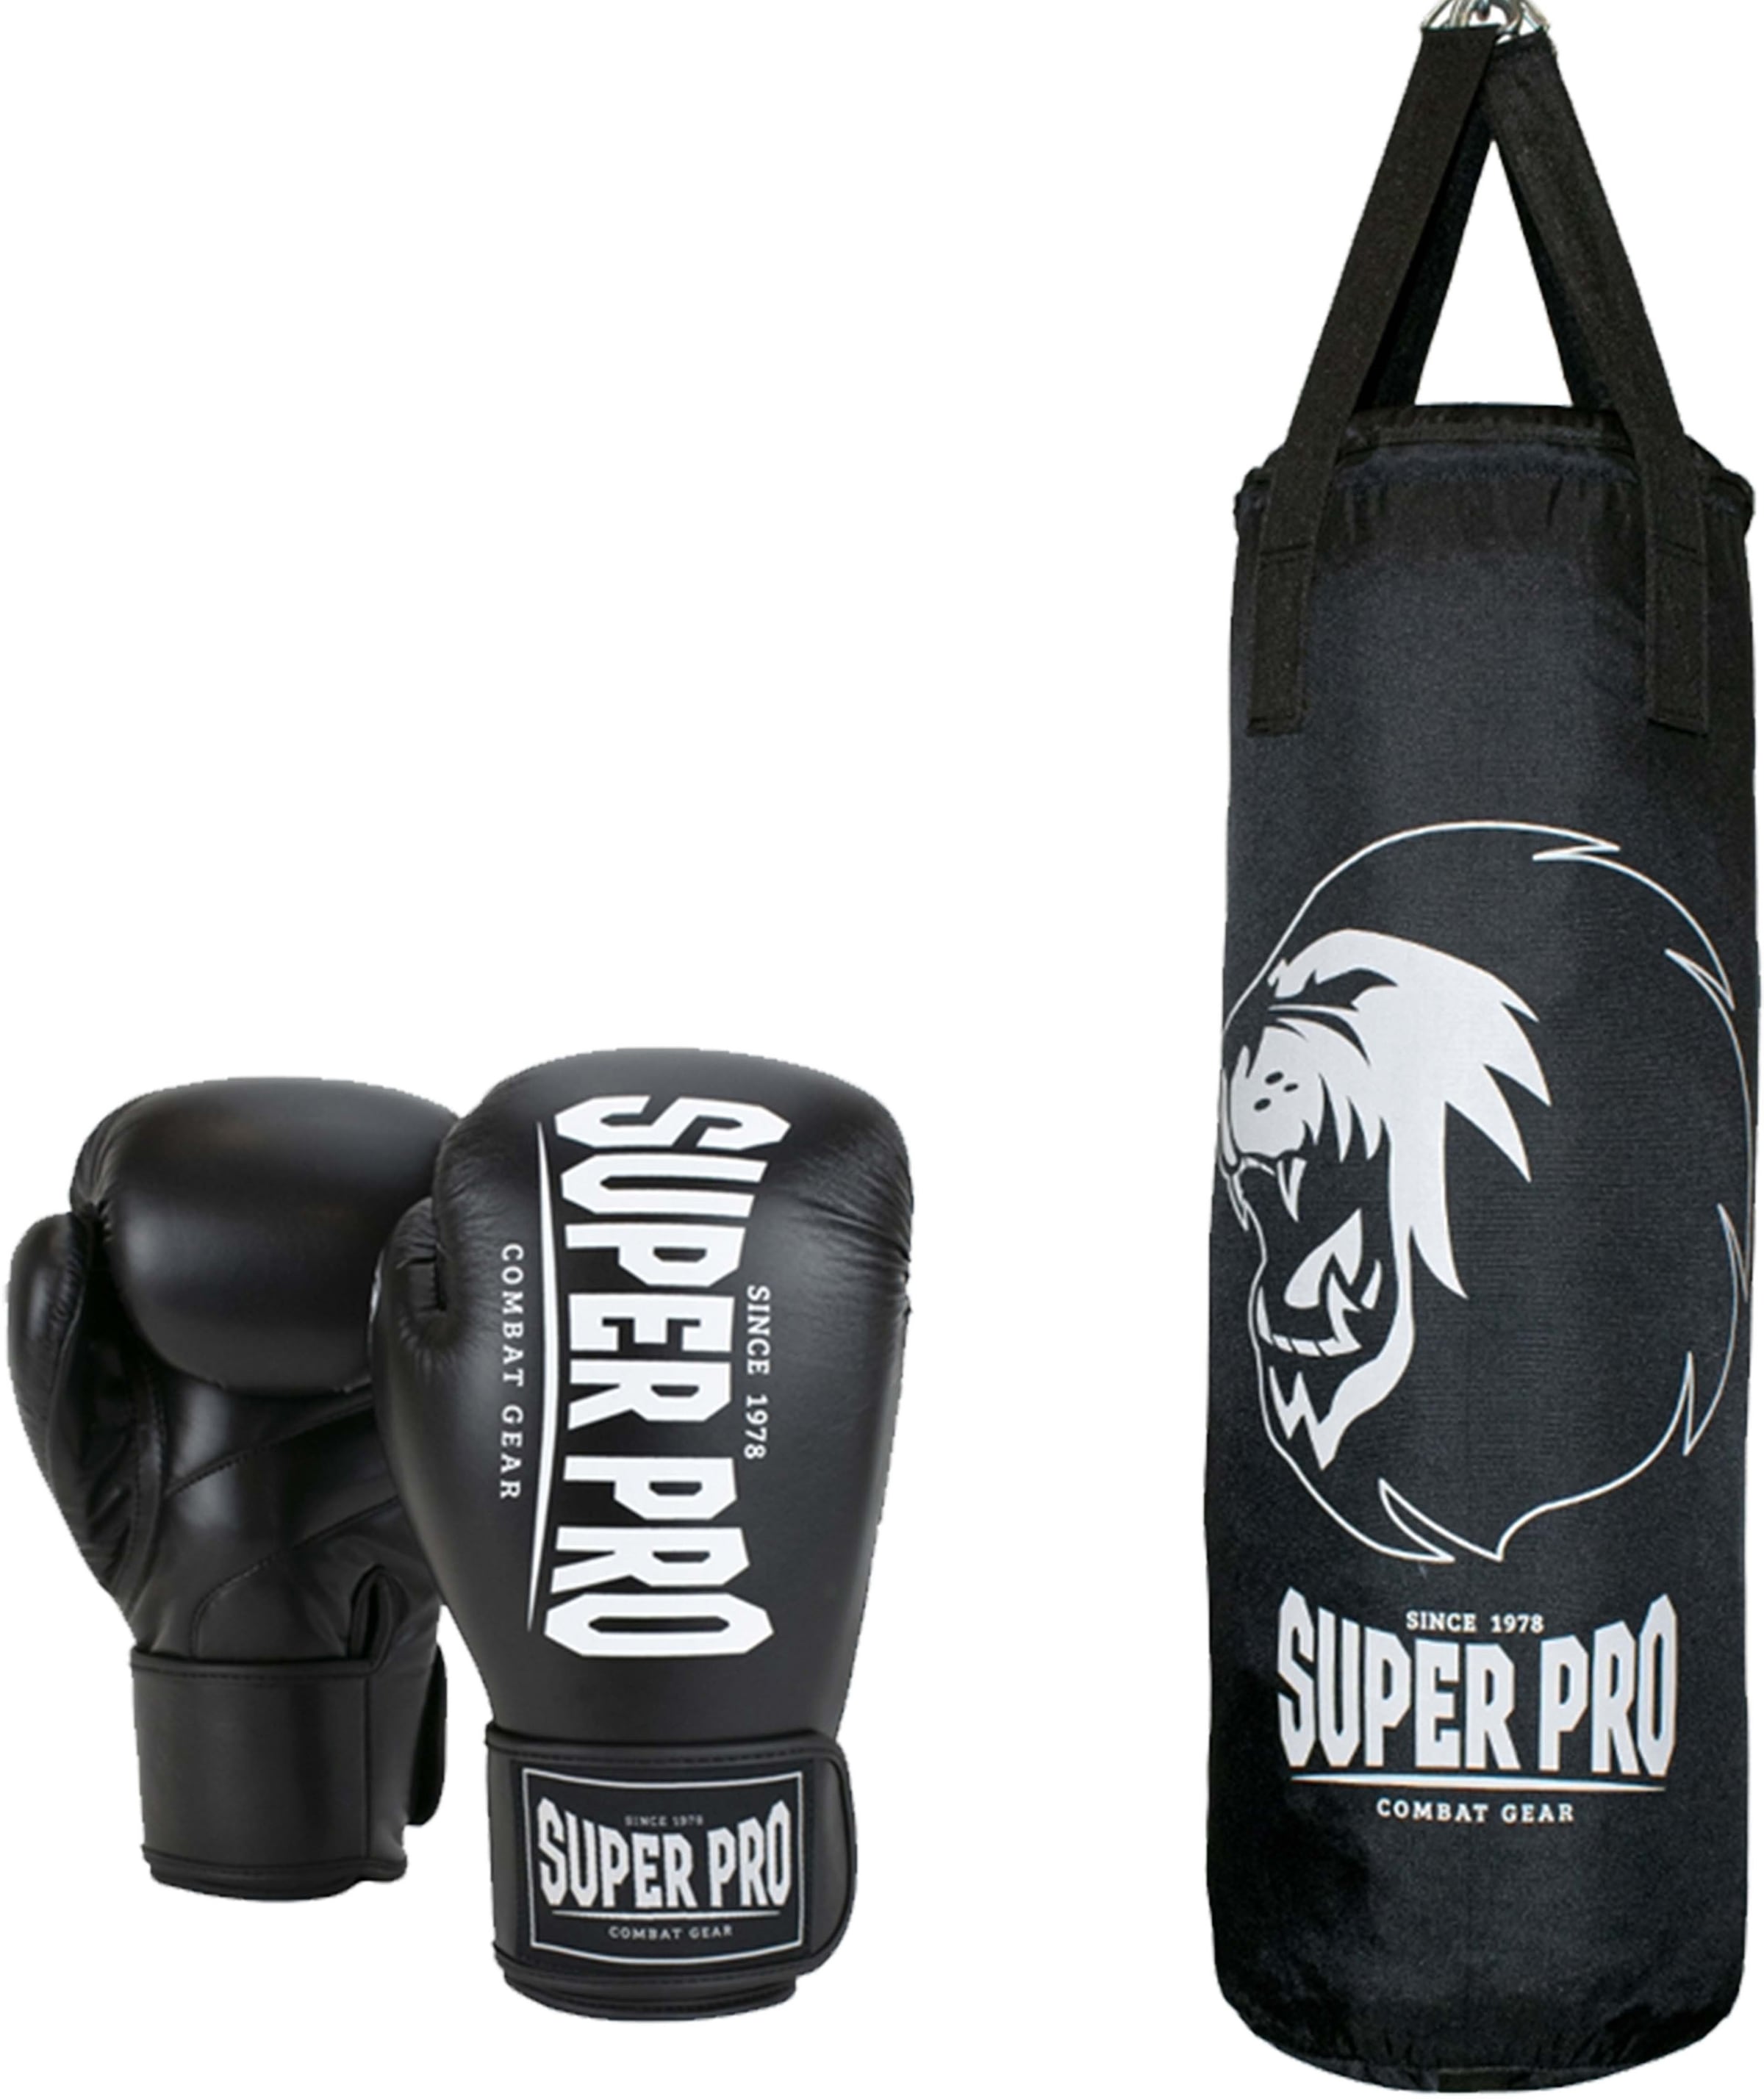 Super Pro Punch«, Boxhandschuhen) mit bei »Boxing Set Boxsack (Set